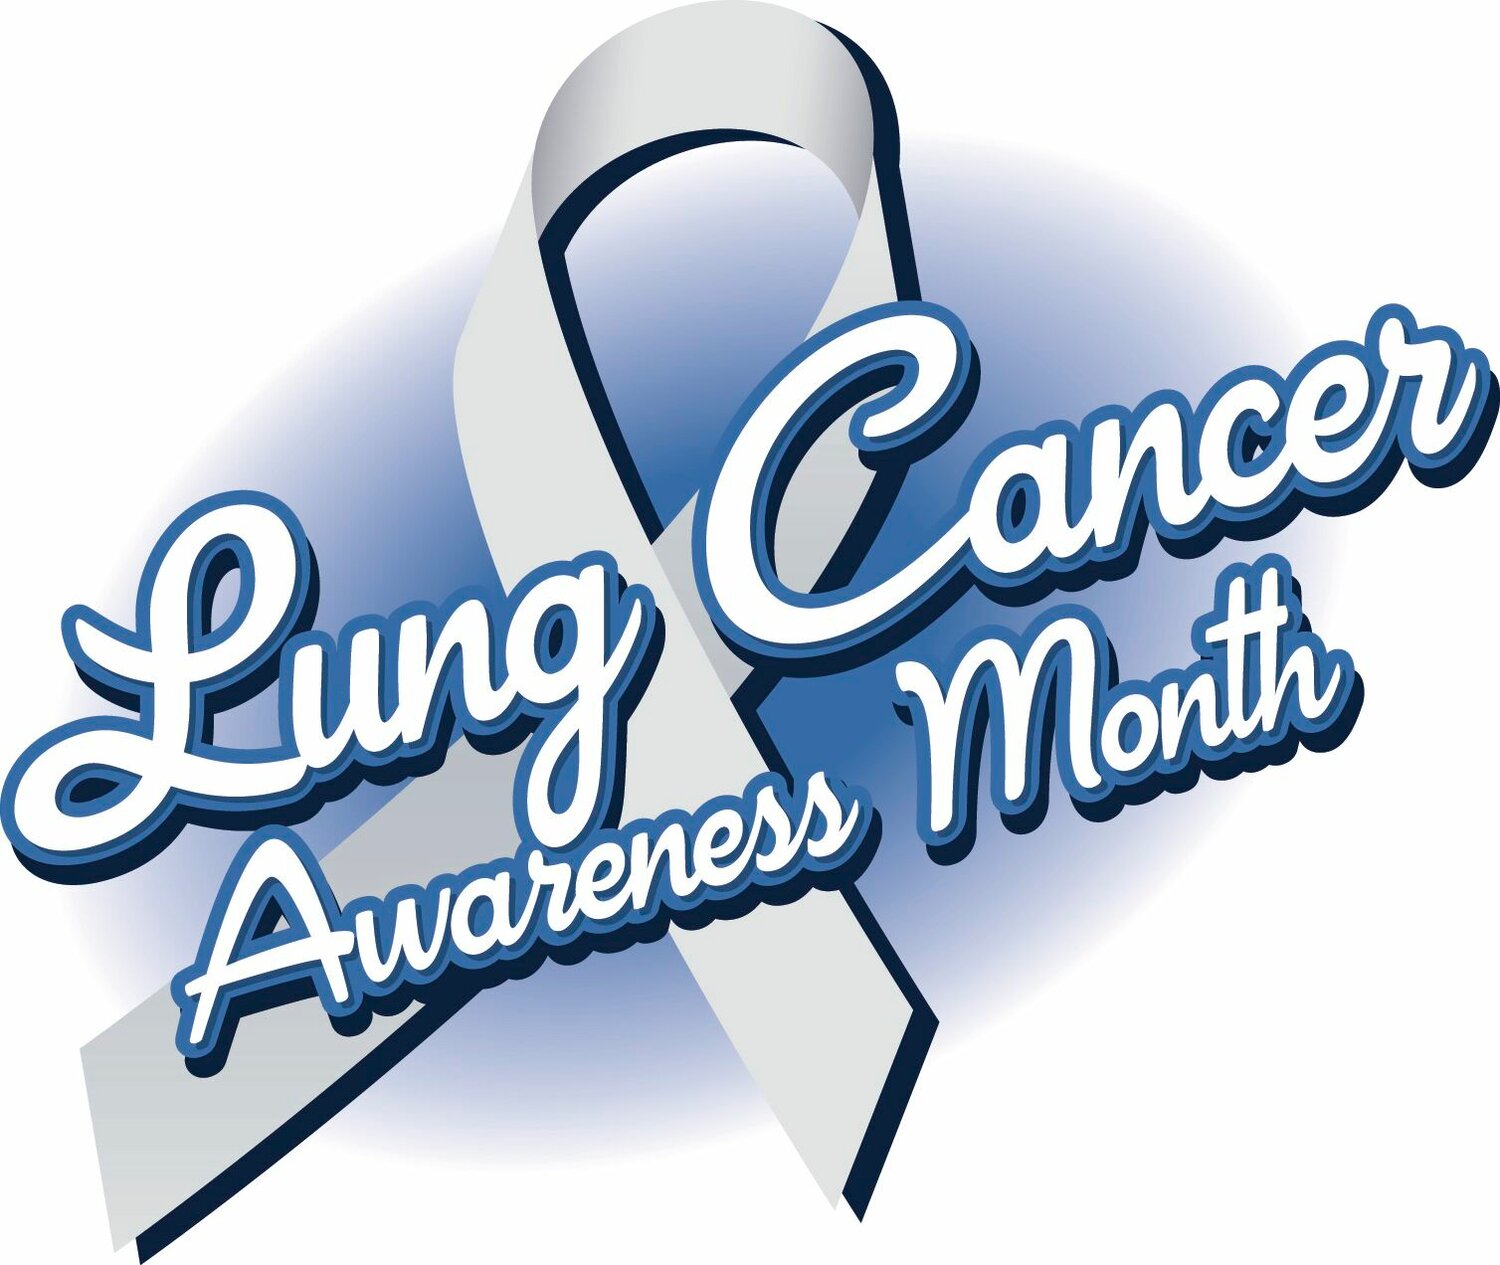 Lung Cancer Awareness Month 2023